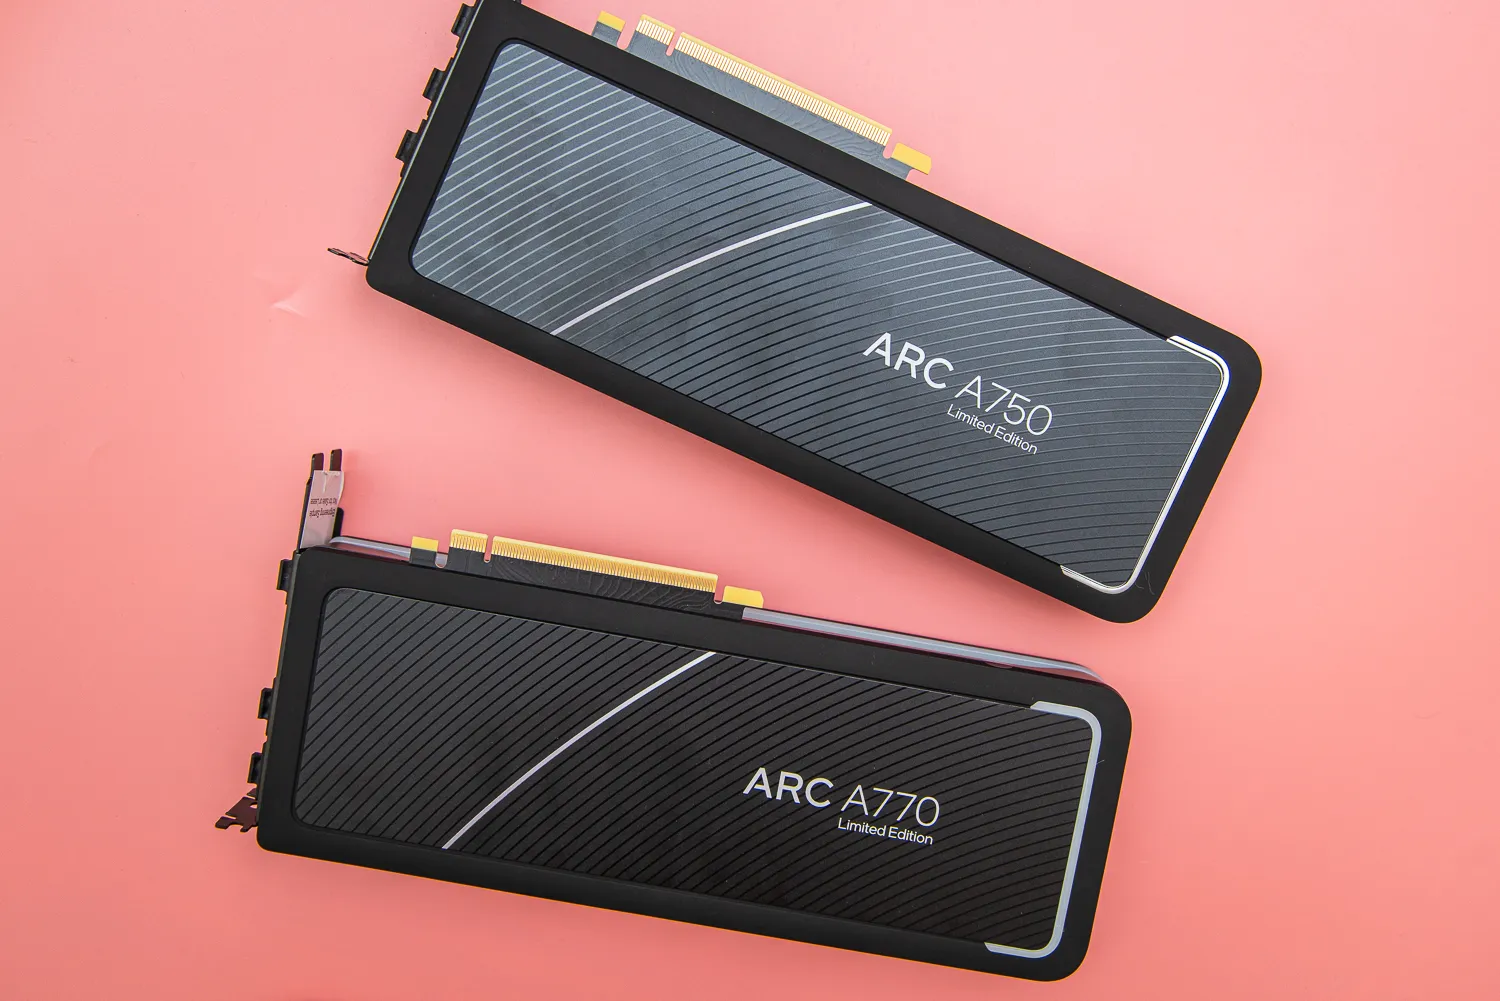 Arc A770和Arc A750显卡的背部。